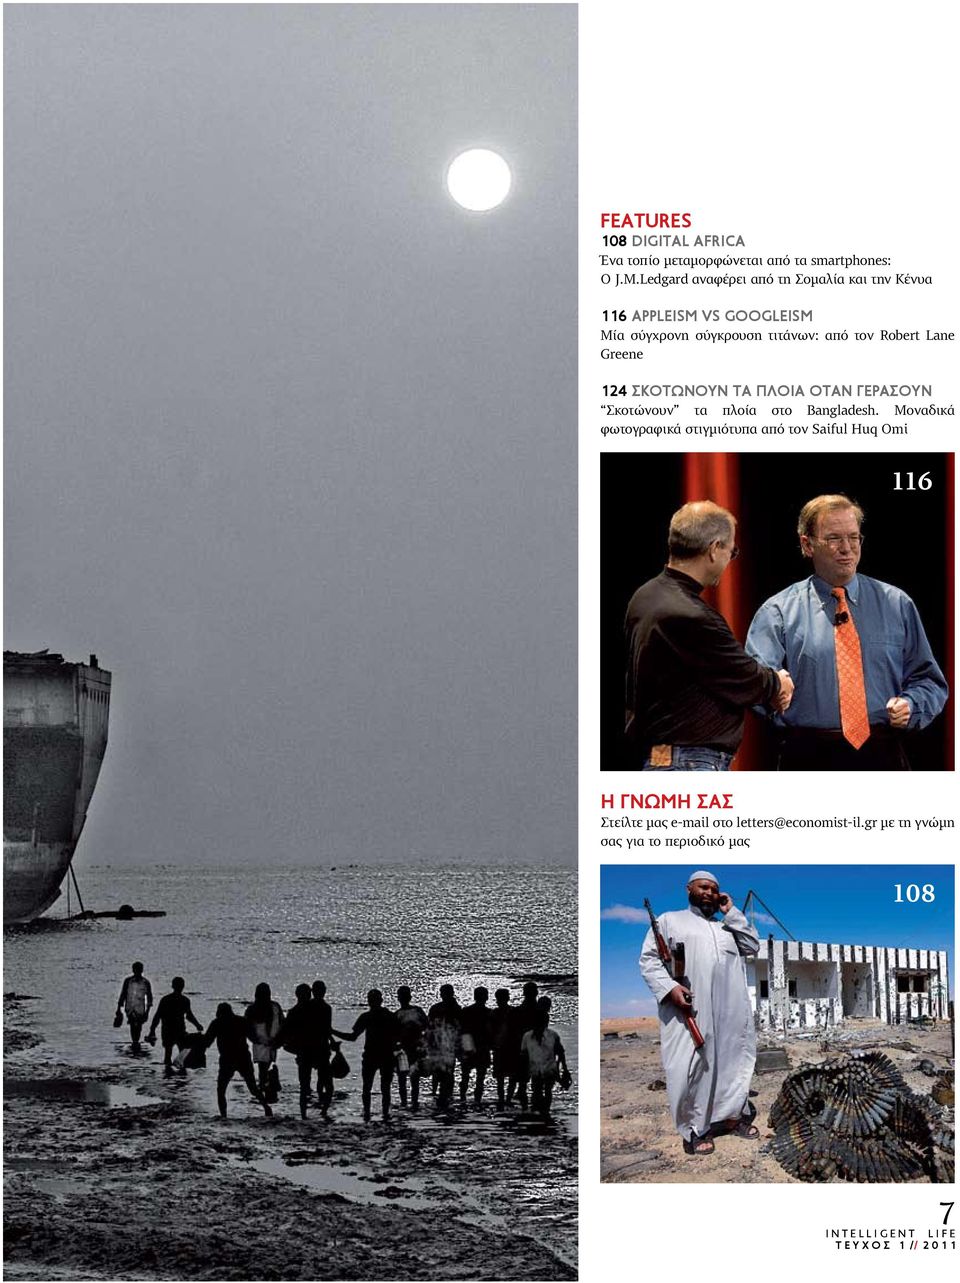 Robert Lane Greene 124 ΣΚΟΤΩΝΟΥΝ ΤΑ ΠΛΟΙΑ ΟΤΑΝ ΓΕΡΑΣΟΥΝ Σκοτώνουν τα πλοία στο Bangladesh.